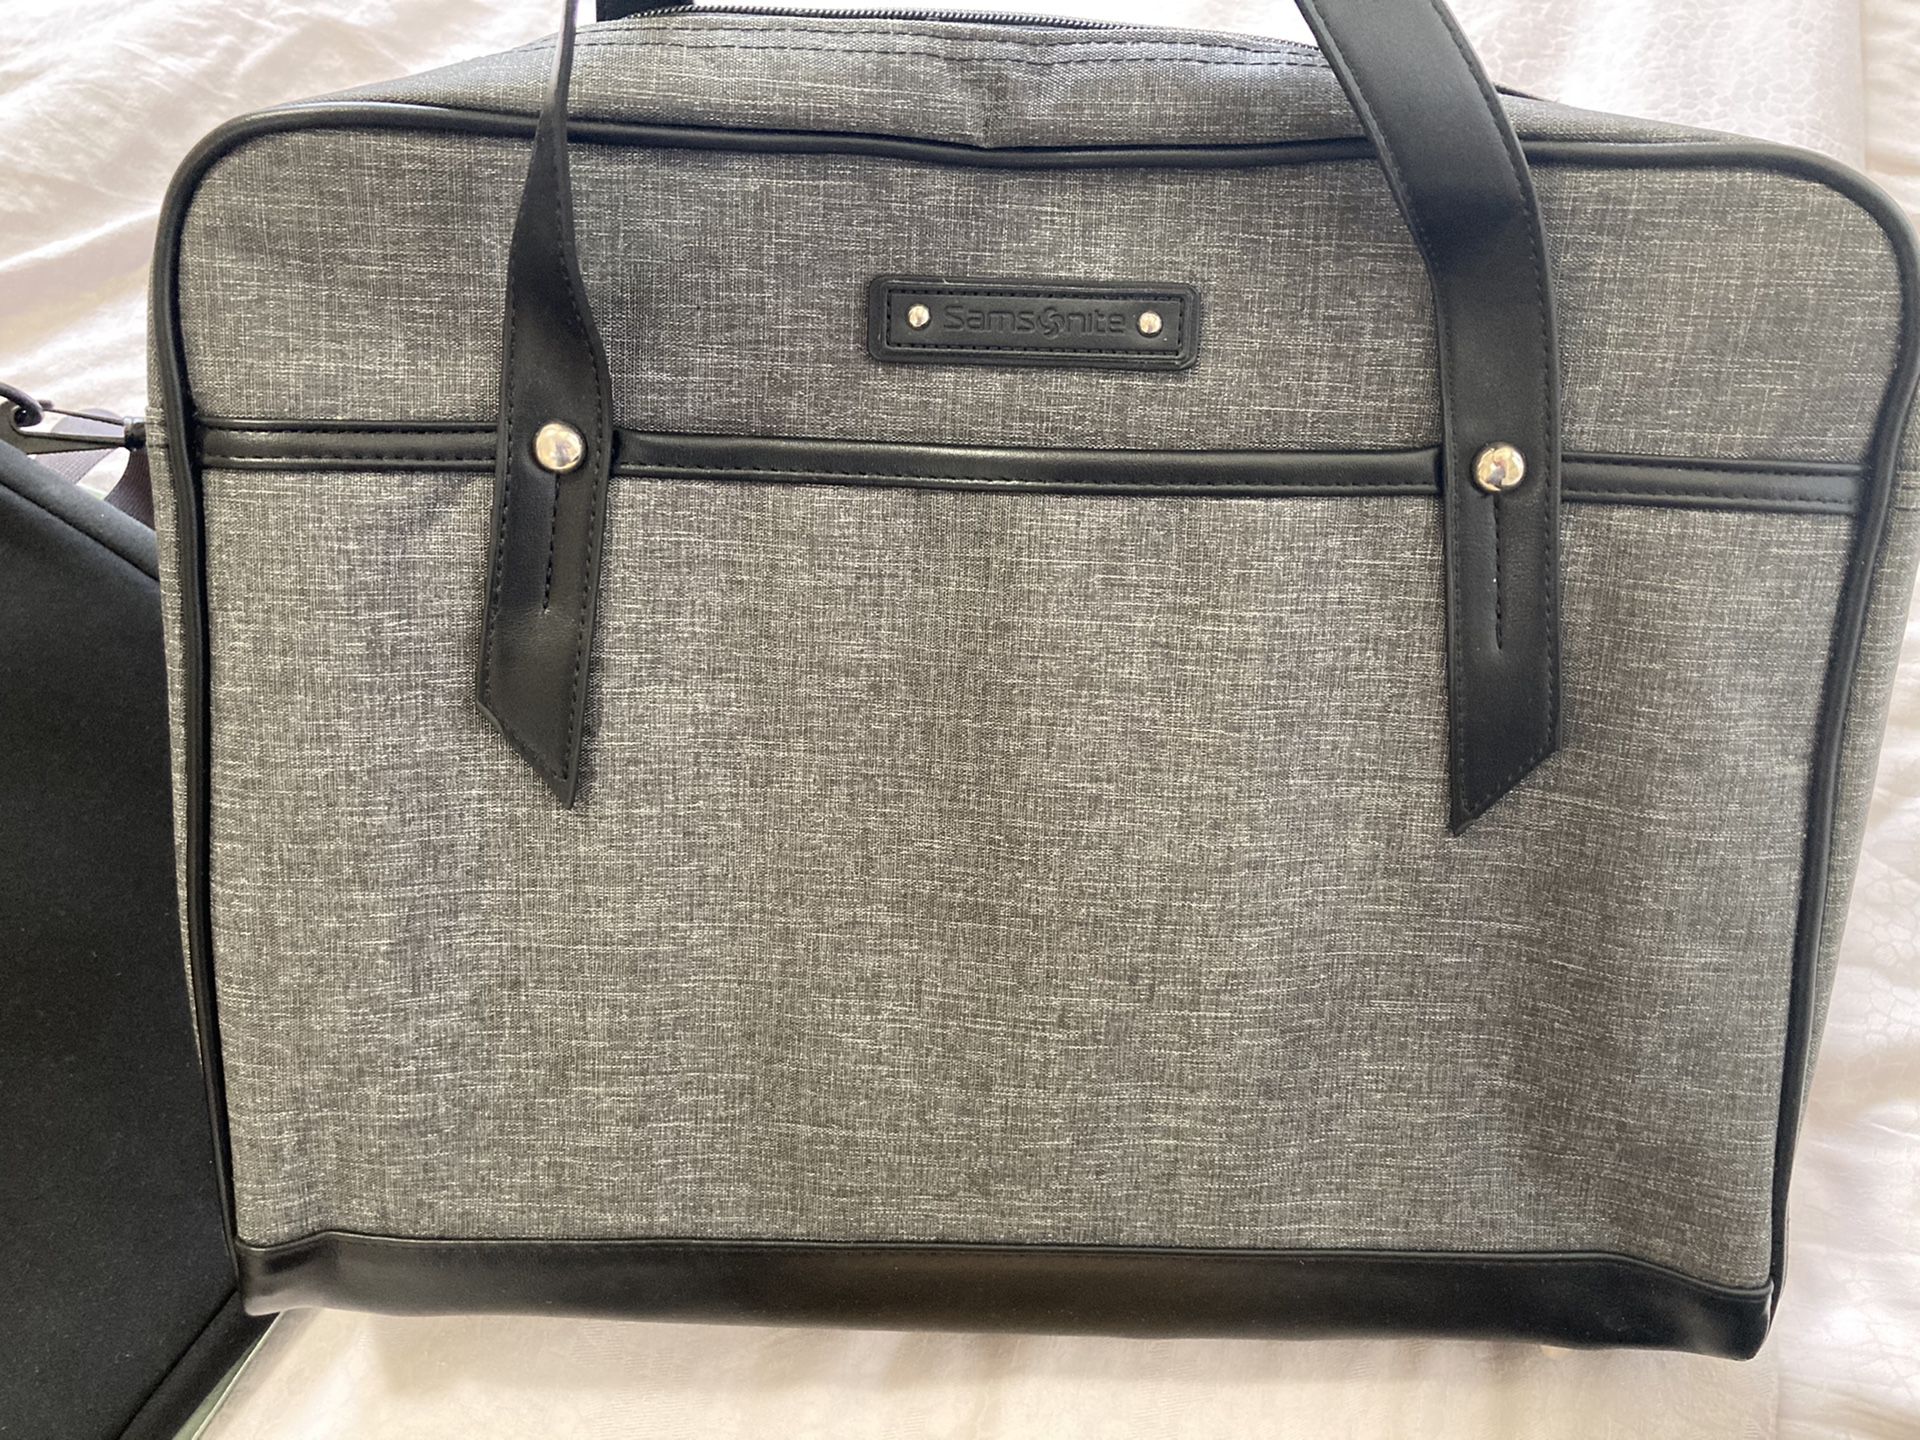 Samsonite buisness slim briefcase/laptop bag